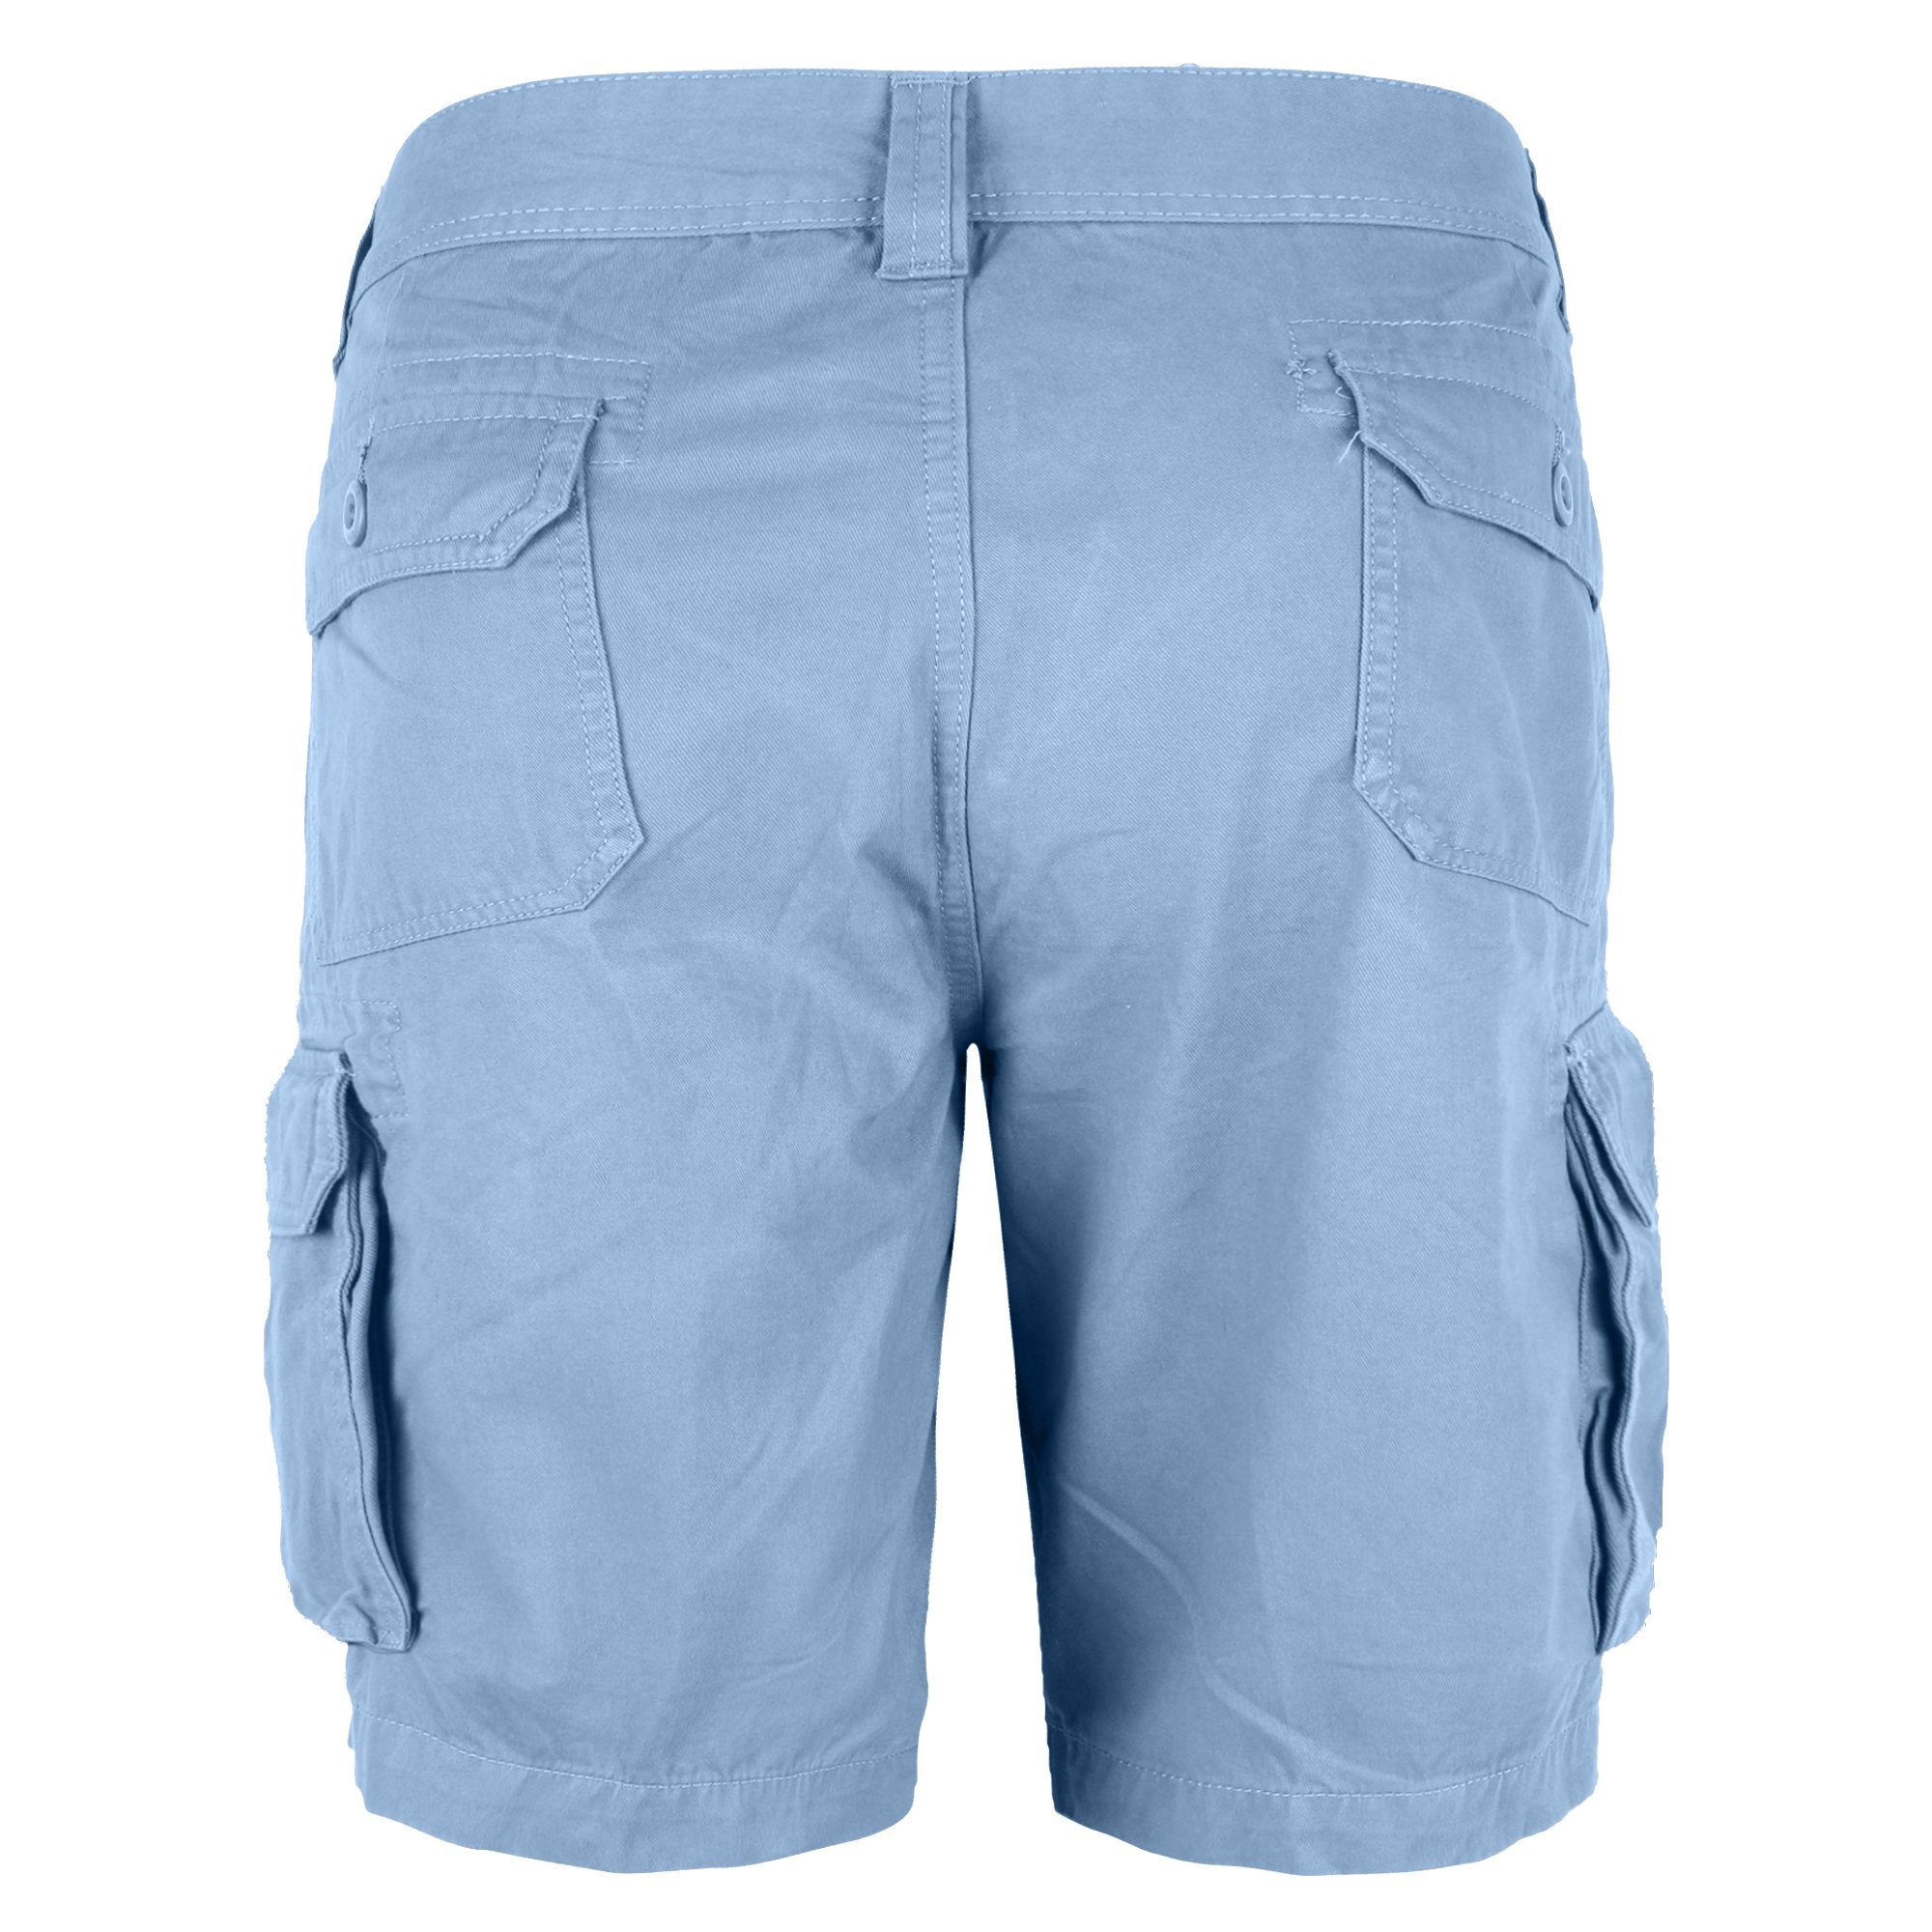 100% Cargoshorts Herren Himmelblau Cargo Shorts Normale Passform Bermuda Baumwolle Hose BlauerHafen